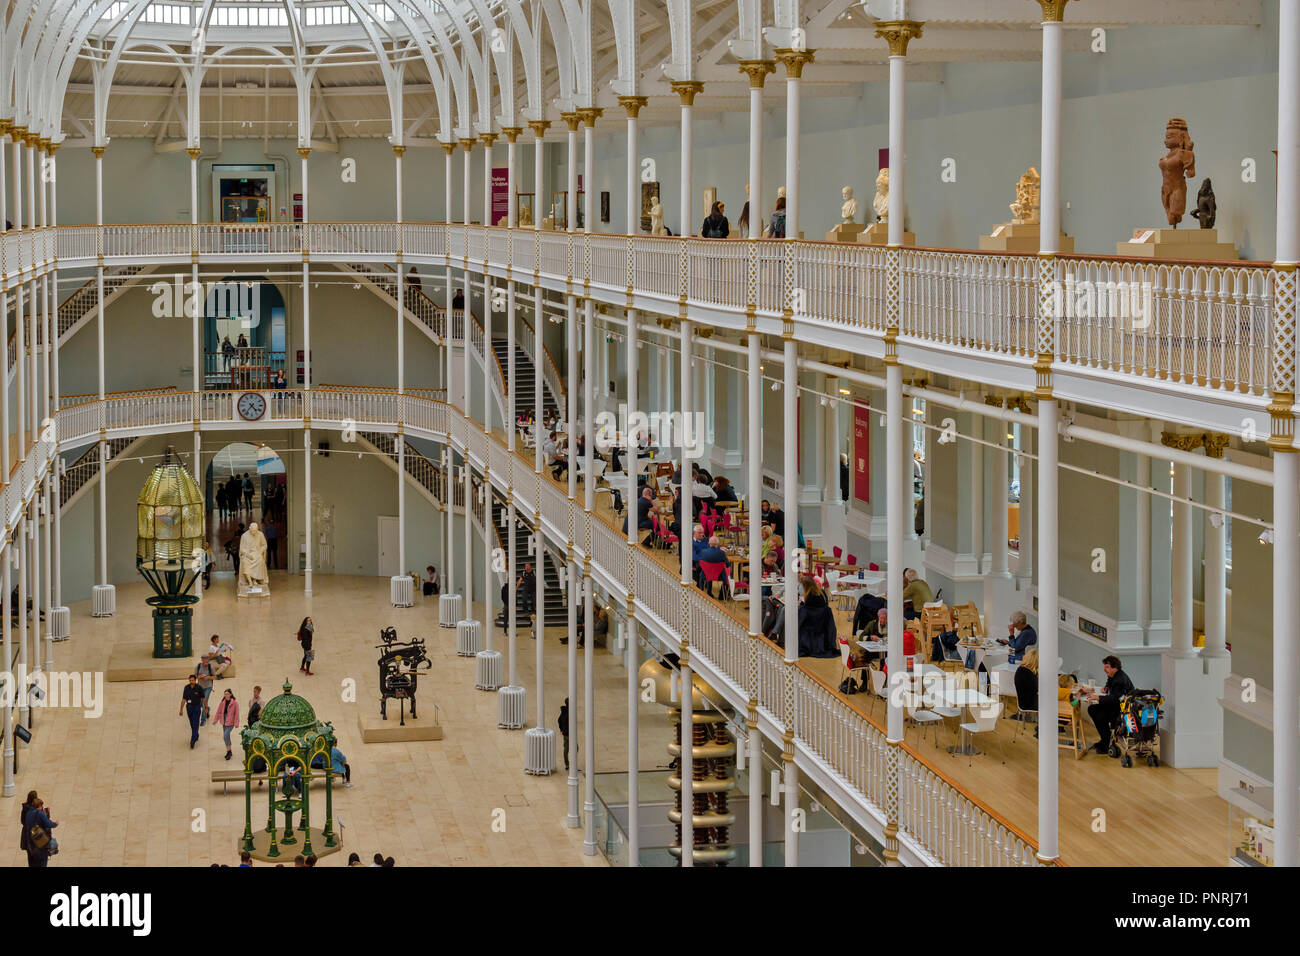 EDINBURGH SCOTLAND NATIONAL MUSEUM OF SCOTLAND INTERIOR WITH BALCONIES AND CAFETERIA Stock Photo